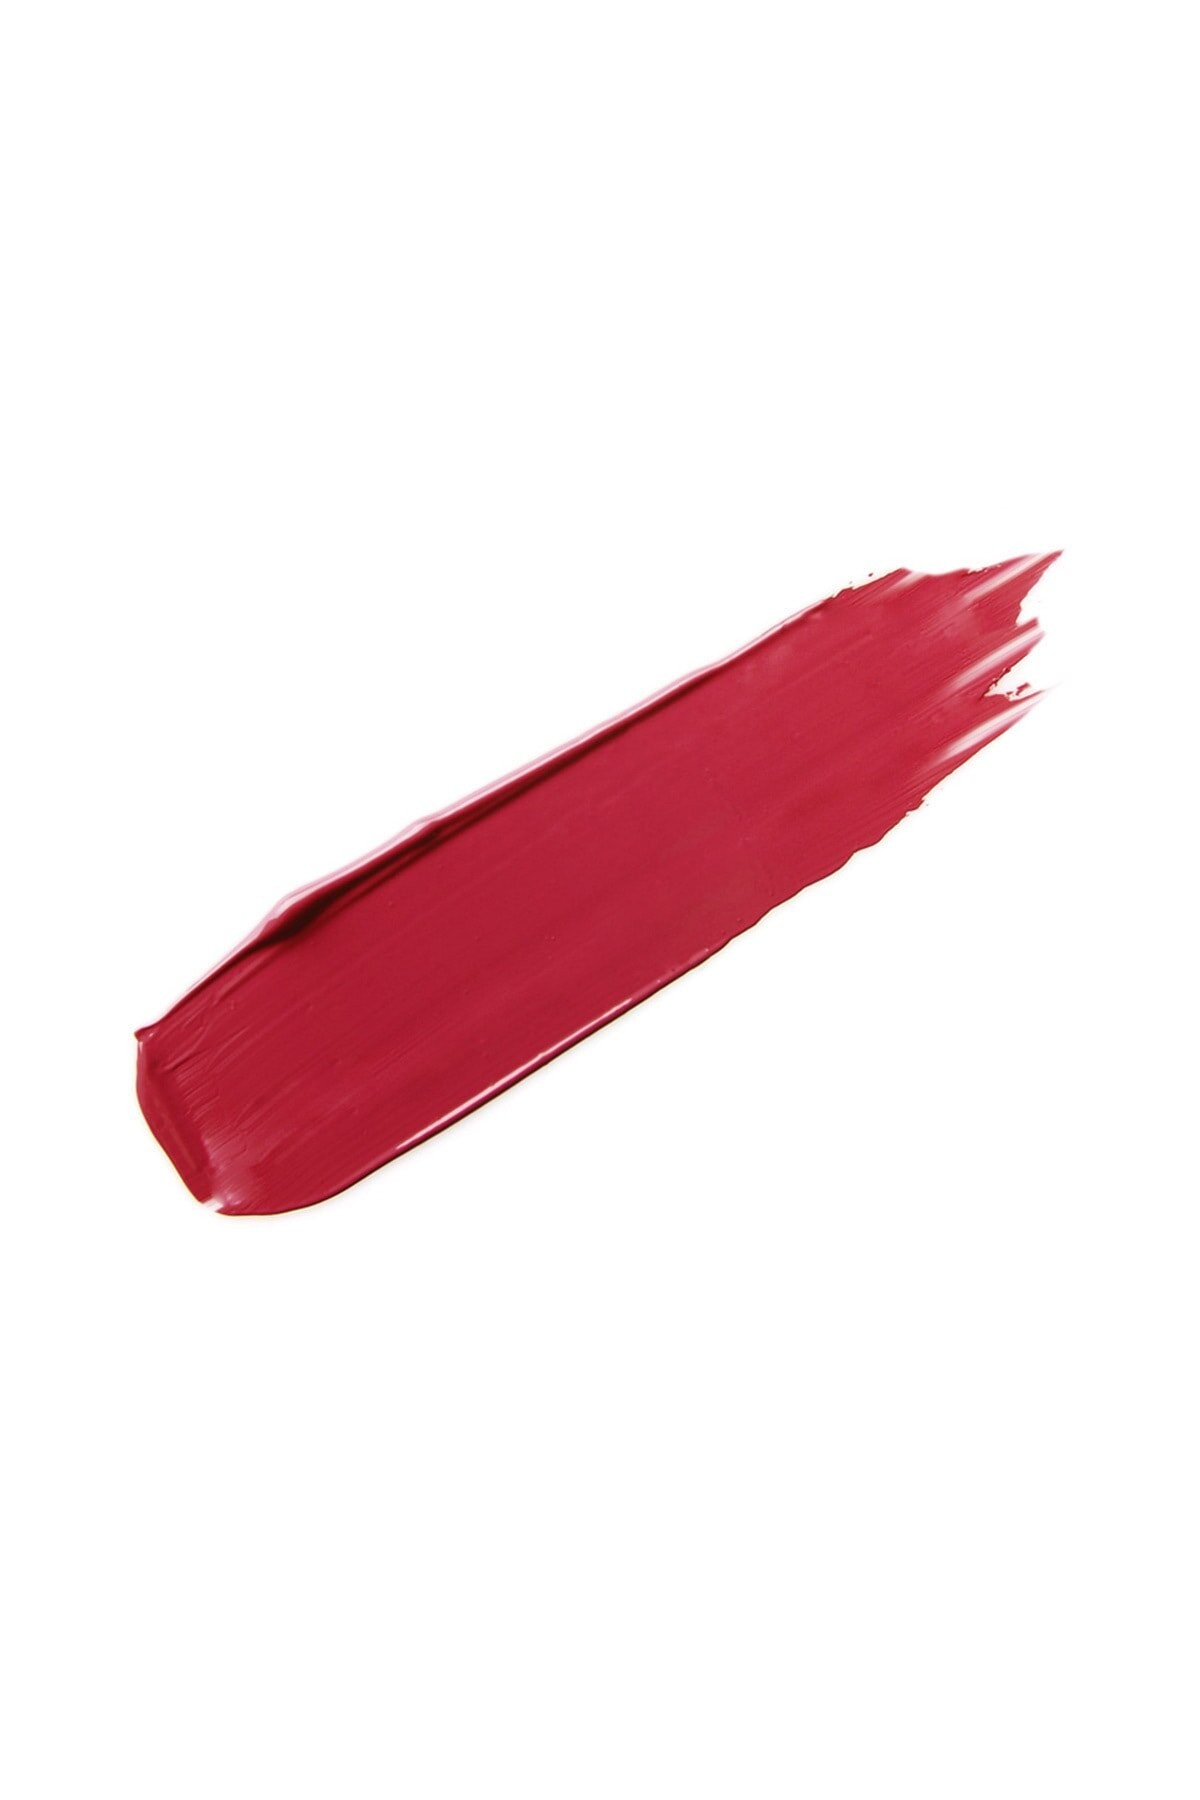 Creamy Delight Lipstick Cherry Red